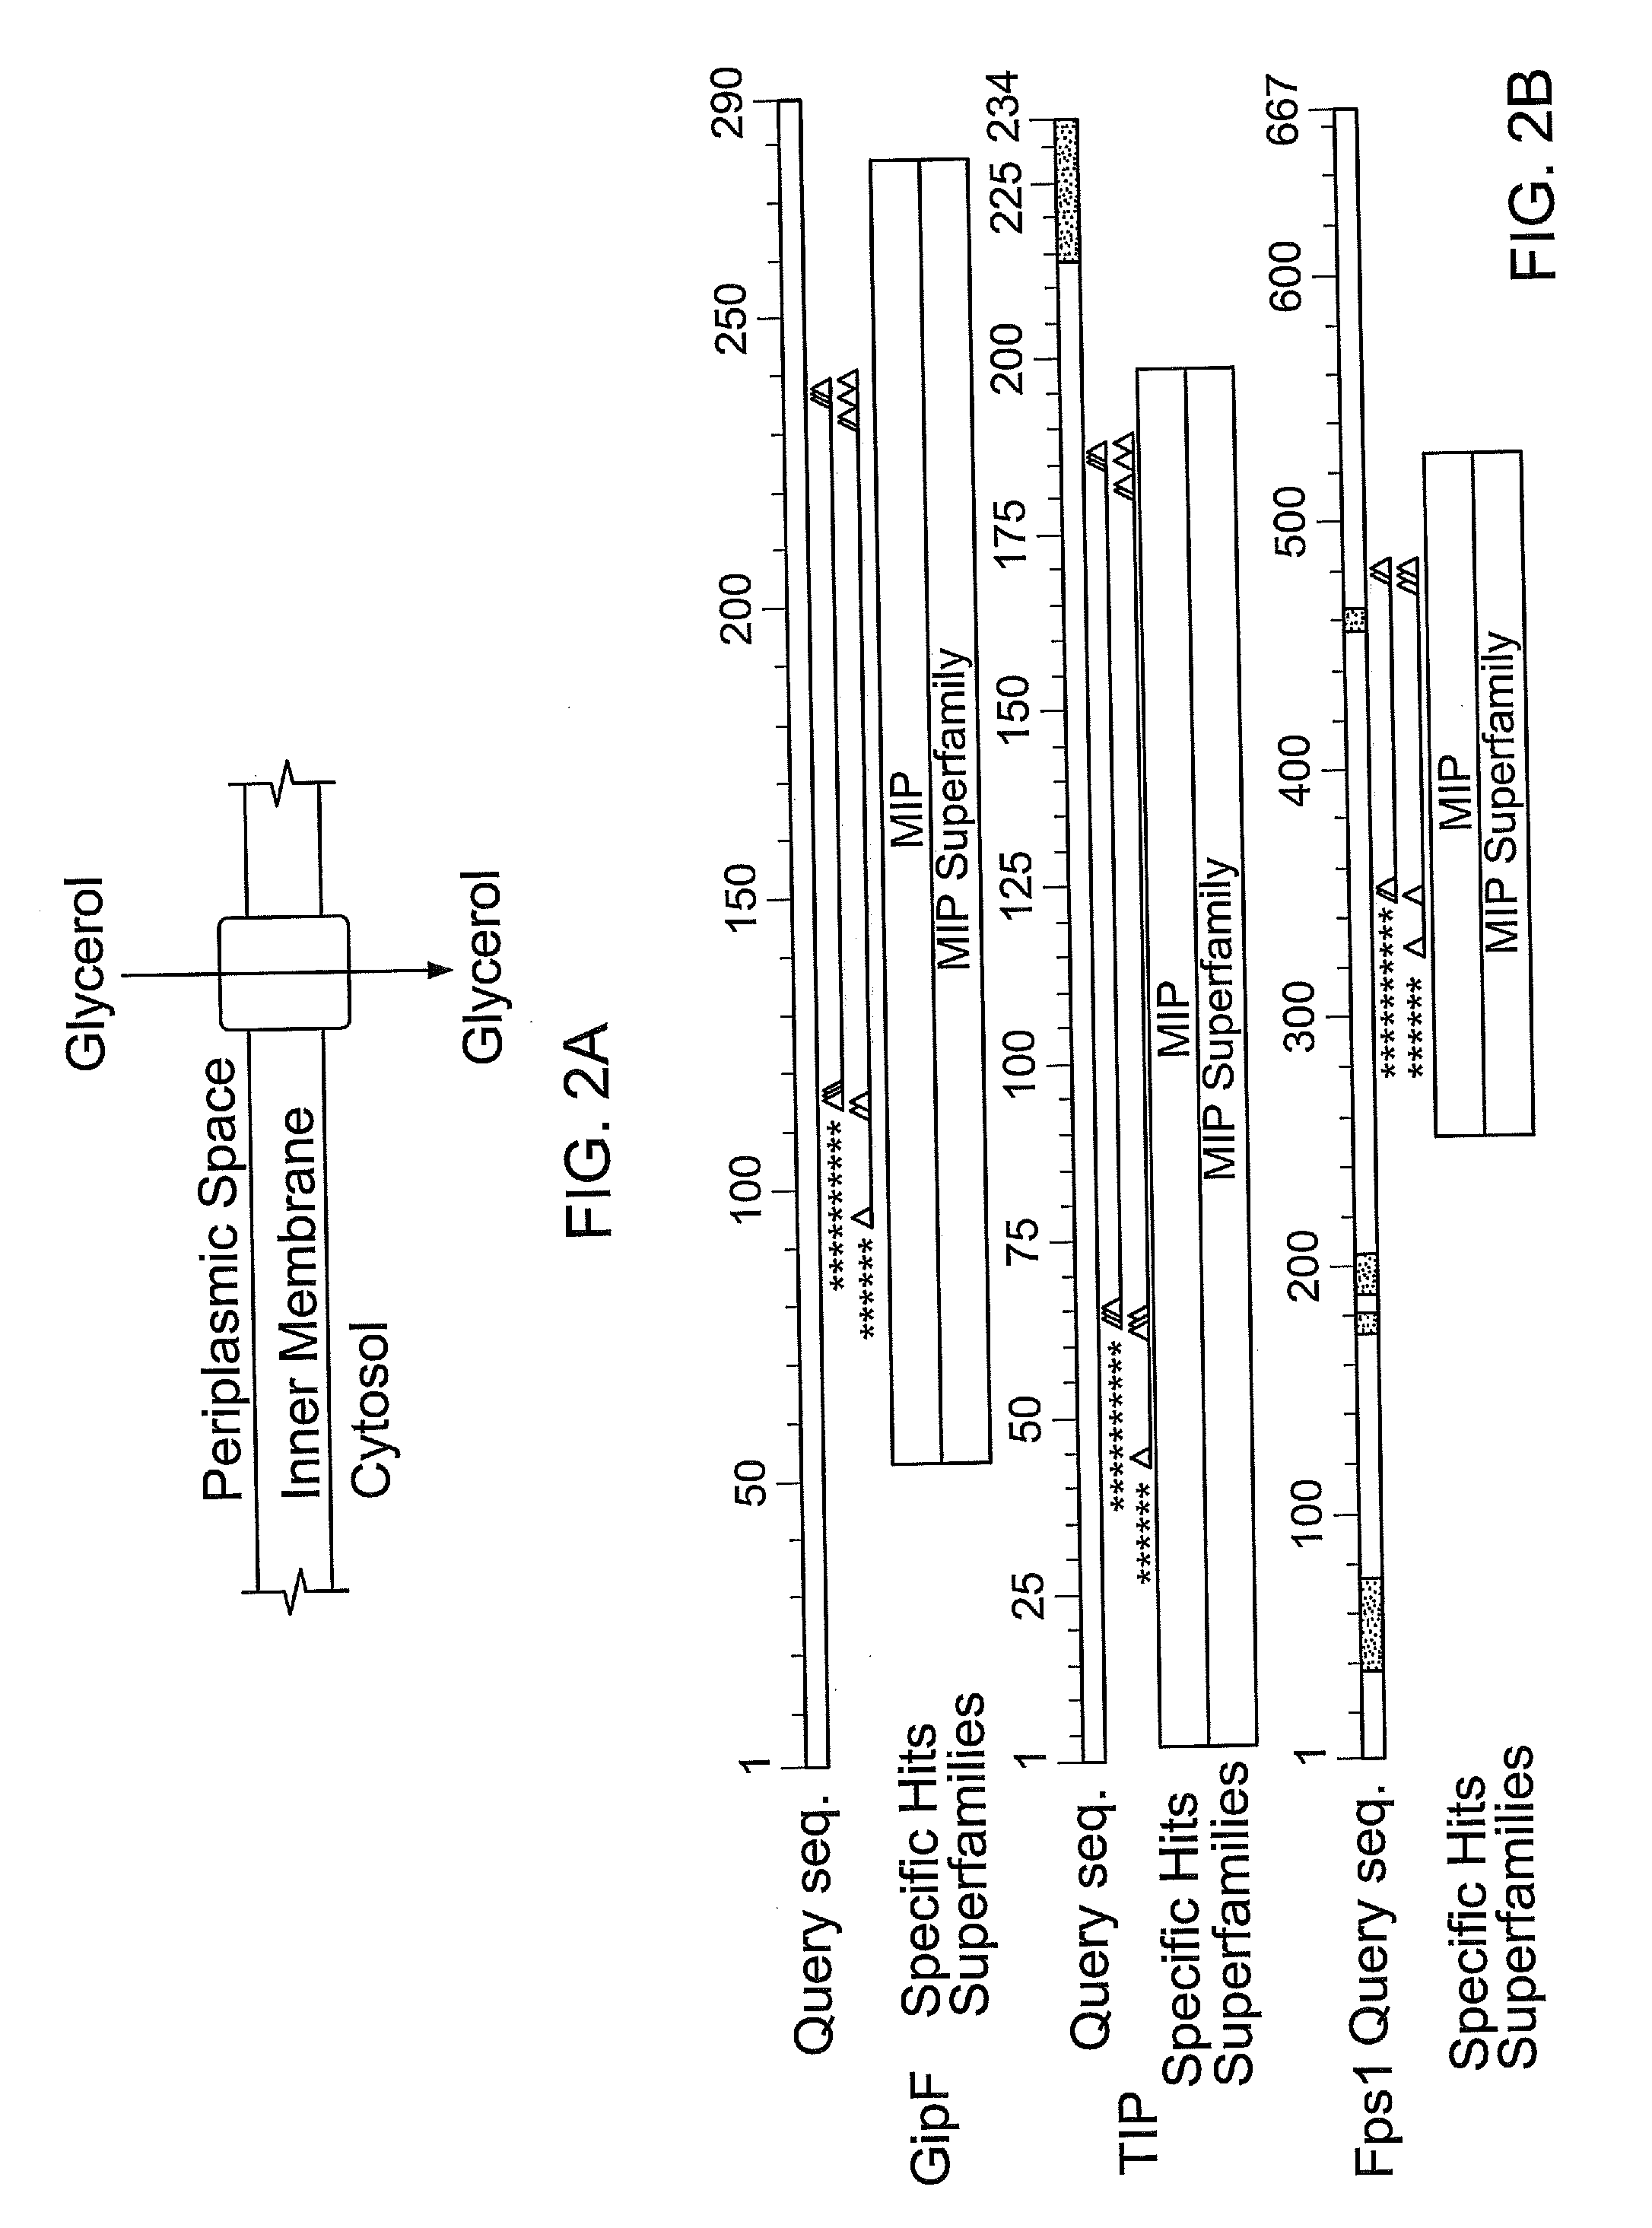 Methods of making nylon intermediates from glycerol